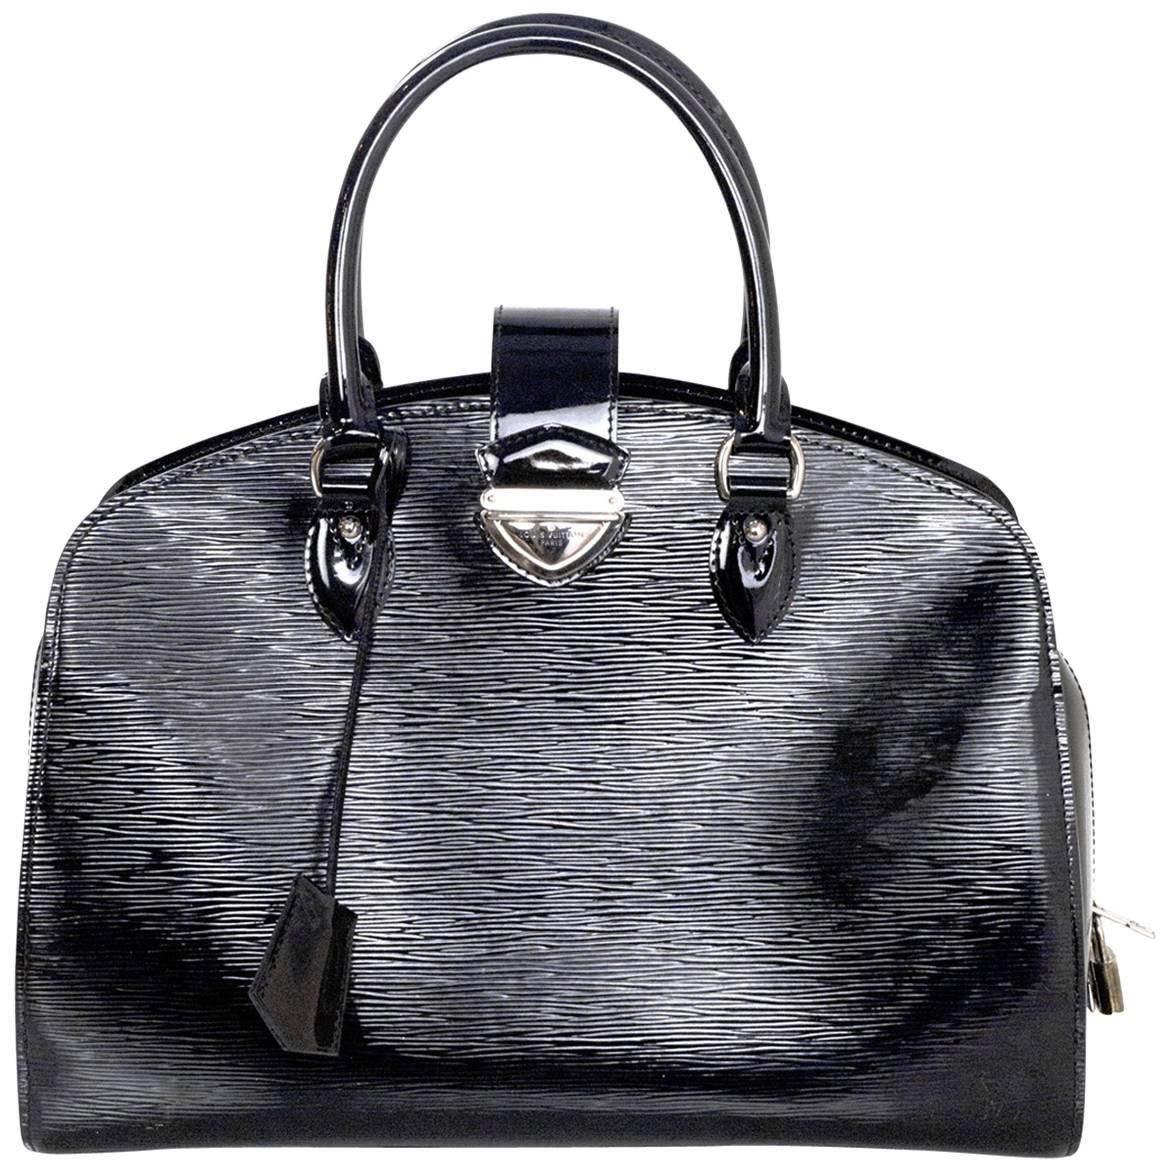 Louis Vuitton Black Electric Epi Leather Neuf GM Tote Bag rt. $3, 350